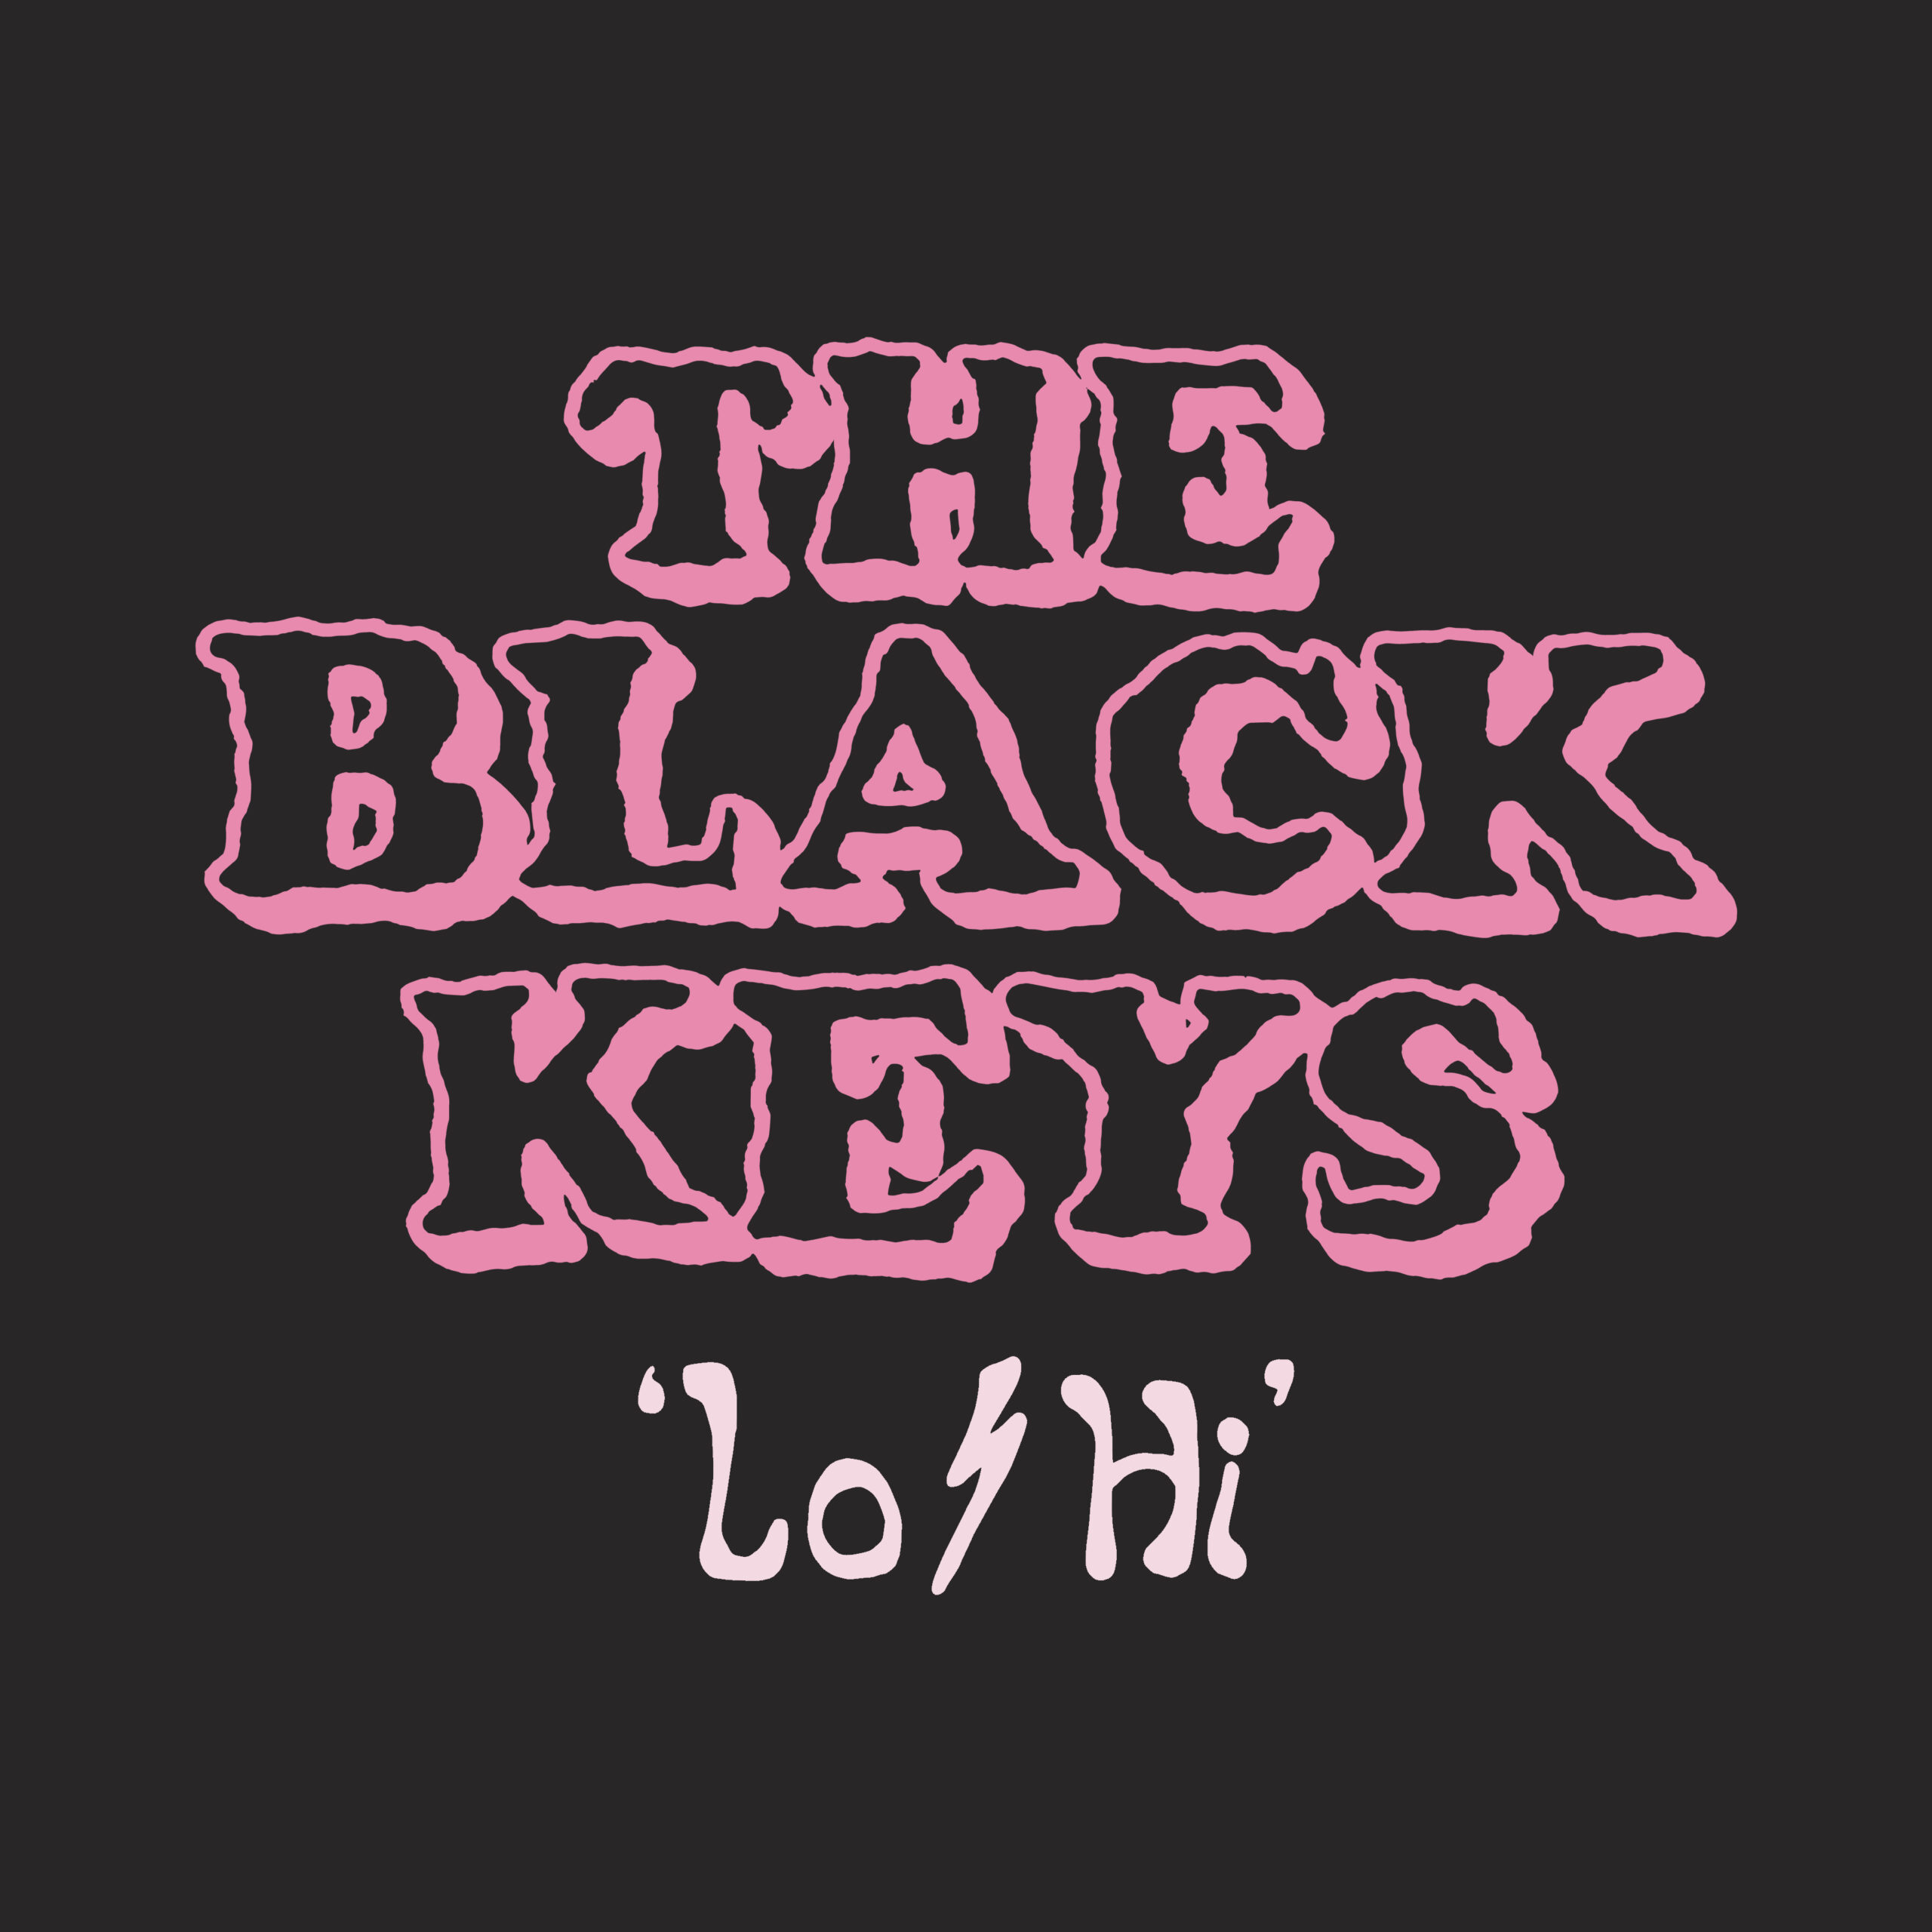 The Black Keys 'Lo/Hi' single album artwork. Photo provided.